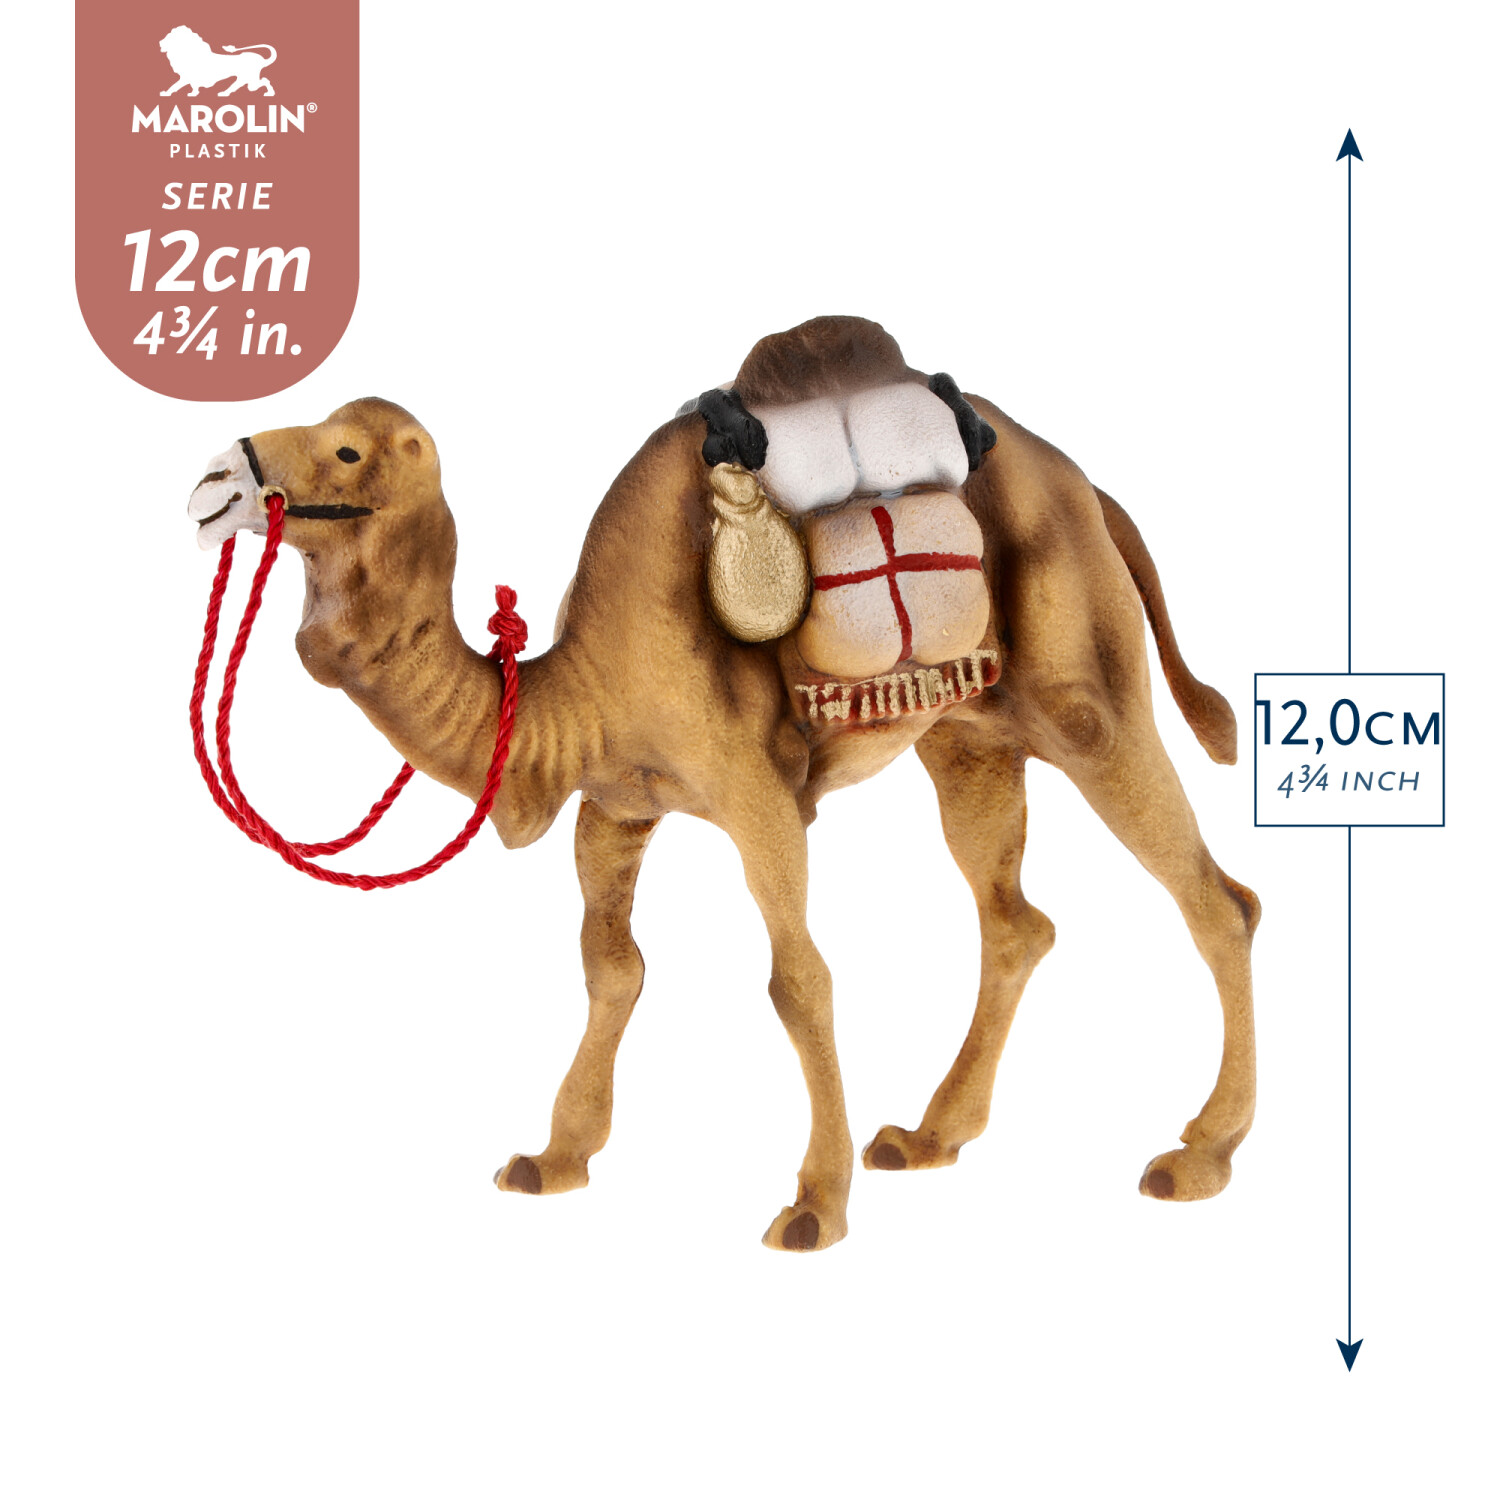 Kamel stehend mit Gepäck, zu 12cm Fig. (Kunststoff) - Marolin Plastik - Krippenfigur aus Kunststoff - made in Germany